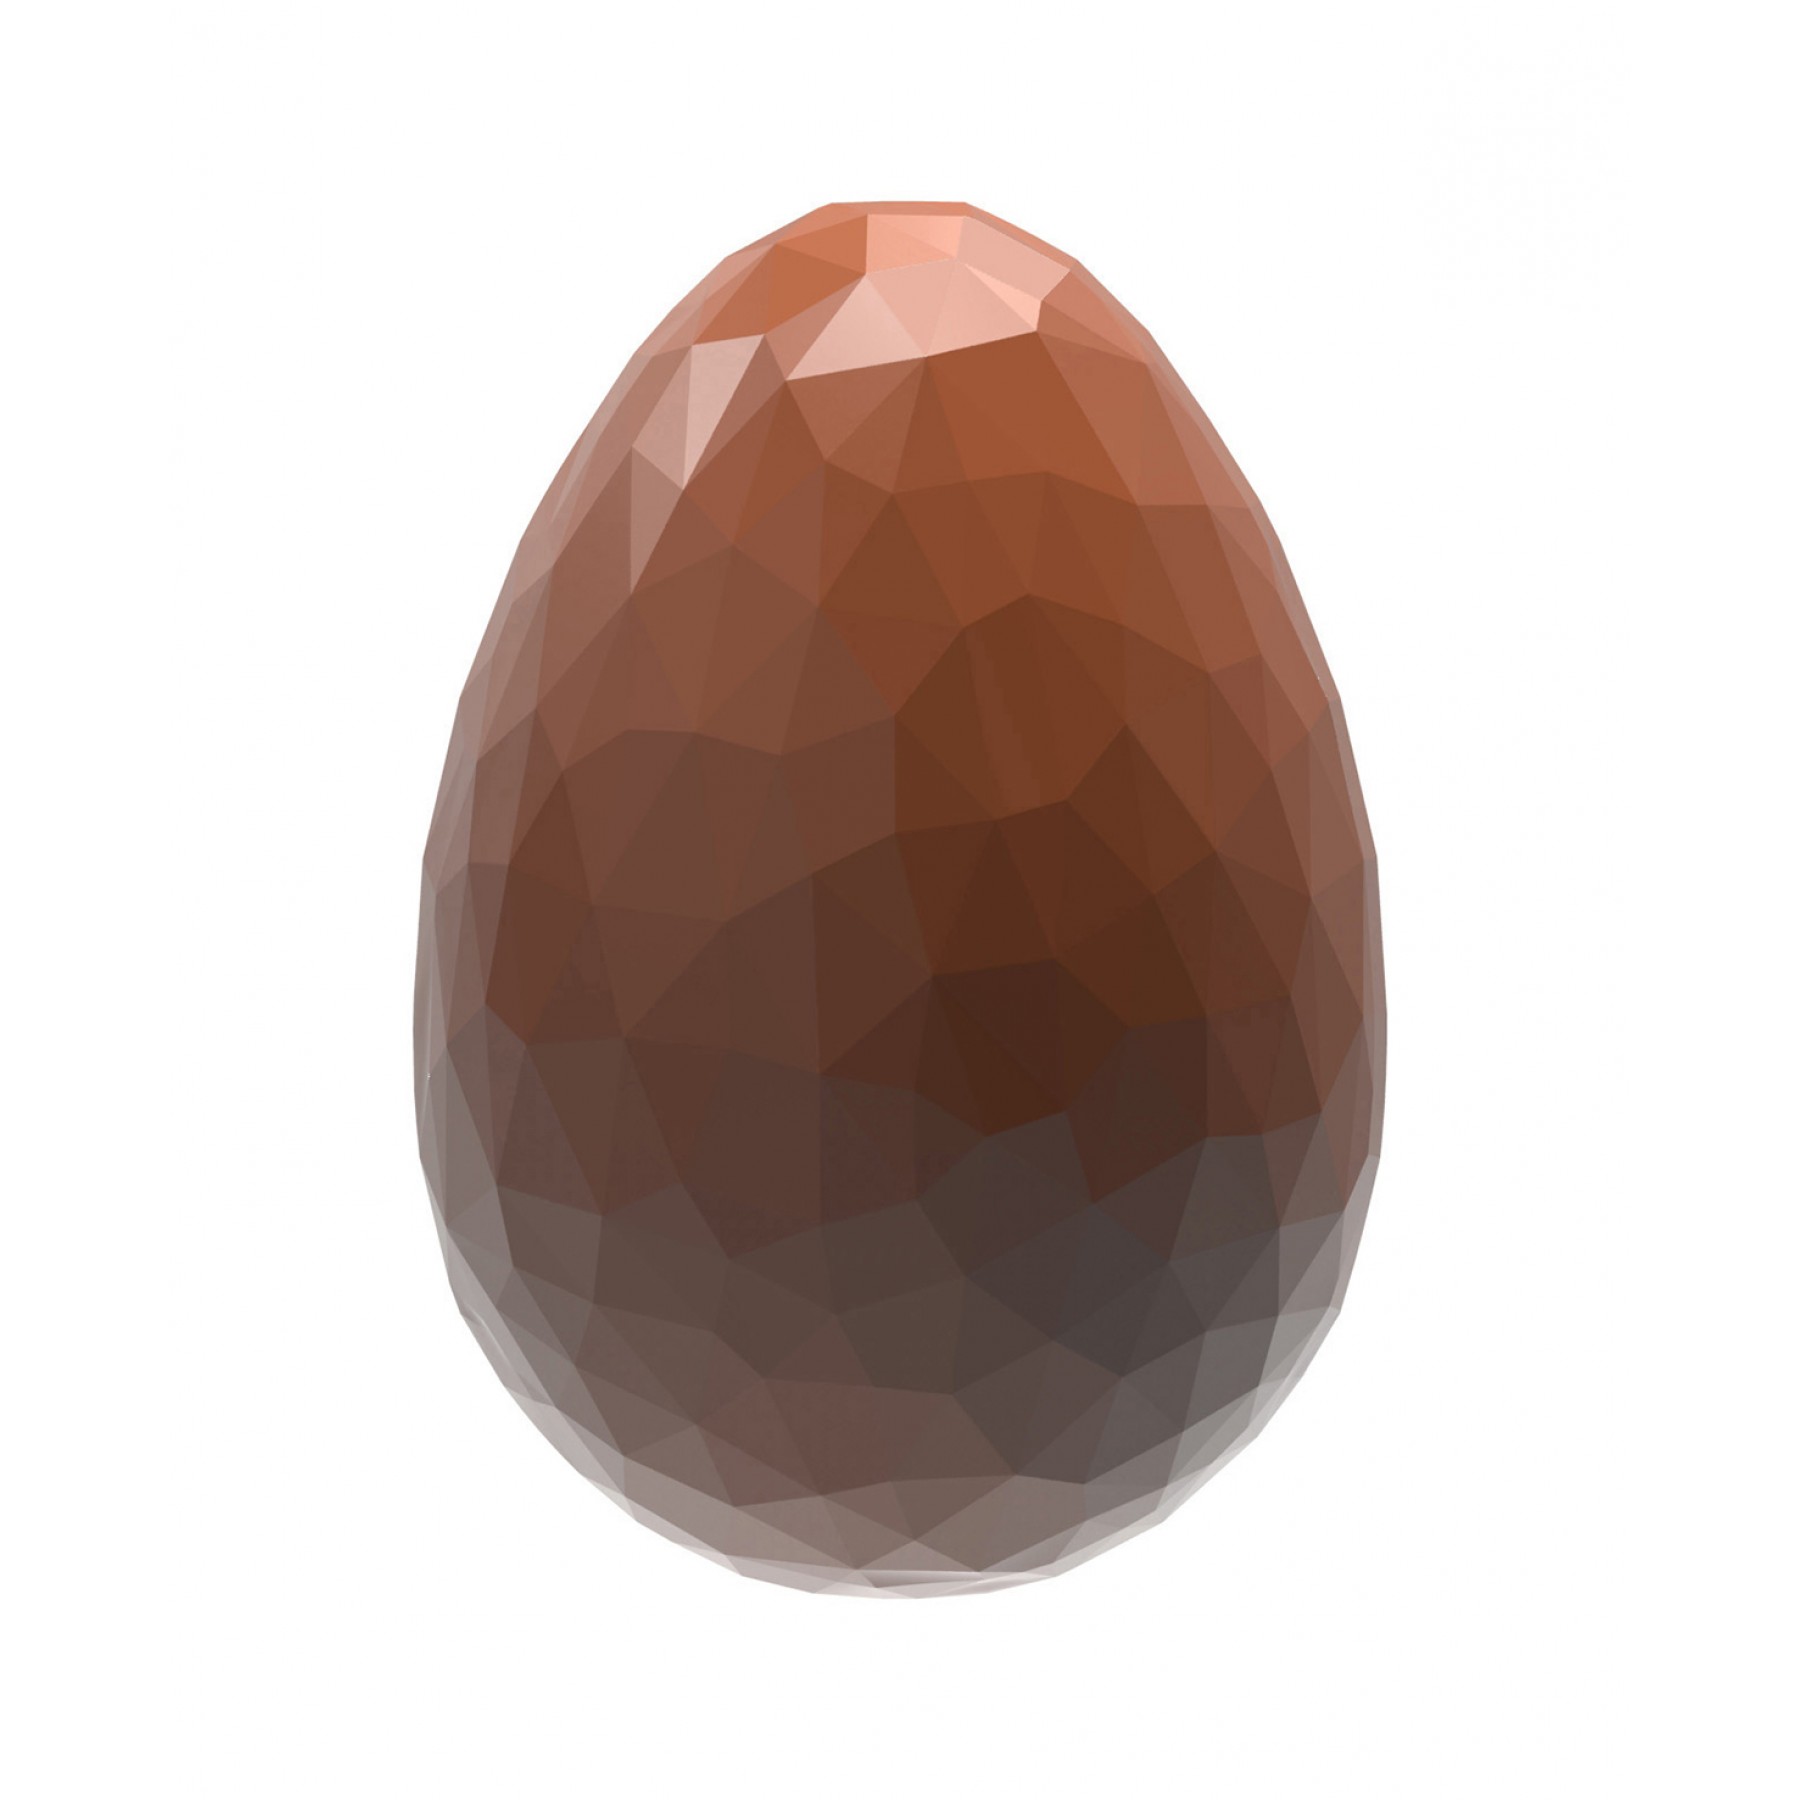 Форма для шоколада «Яйцо кристалл мини» поликарбонатная CW1891, 24 ячейки, Chocolate World, Бельгия  | Фото — Магазин Andy Chef  1